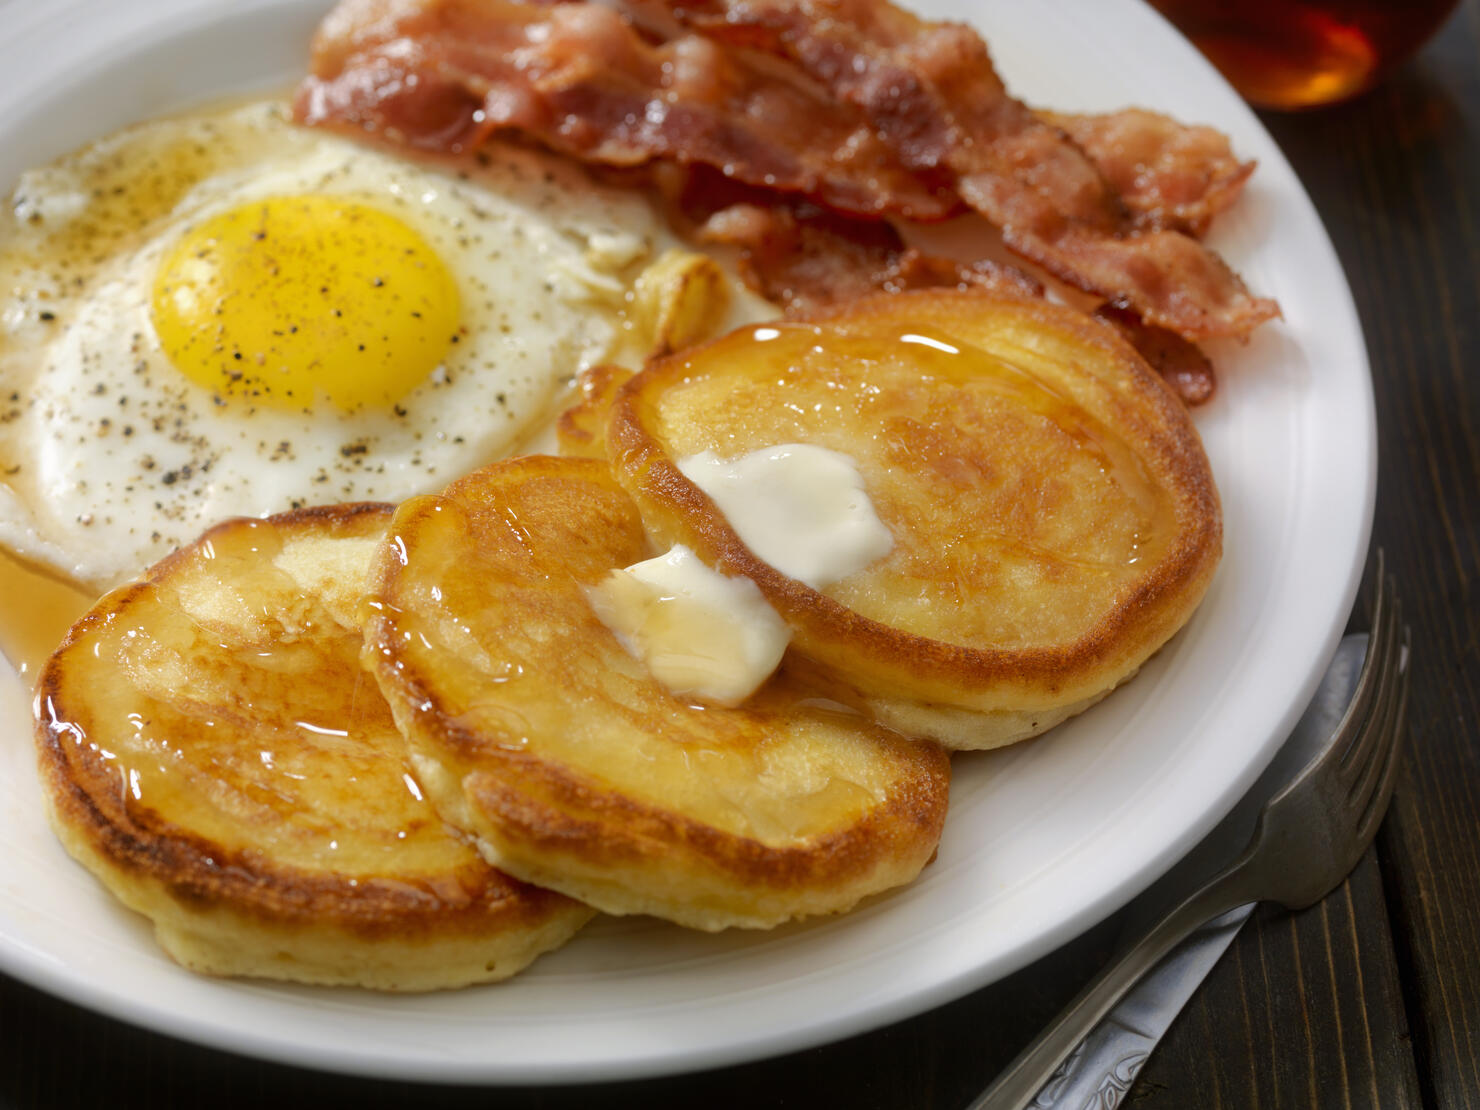 Grand Slam Breakfast - Pancakes, Bacon and Eggs